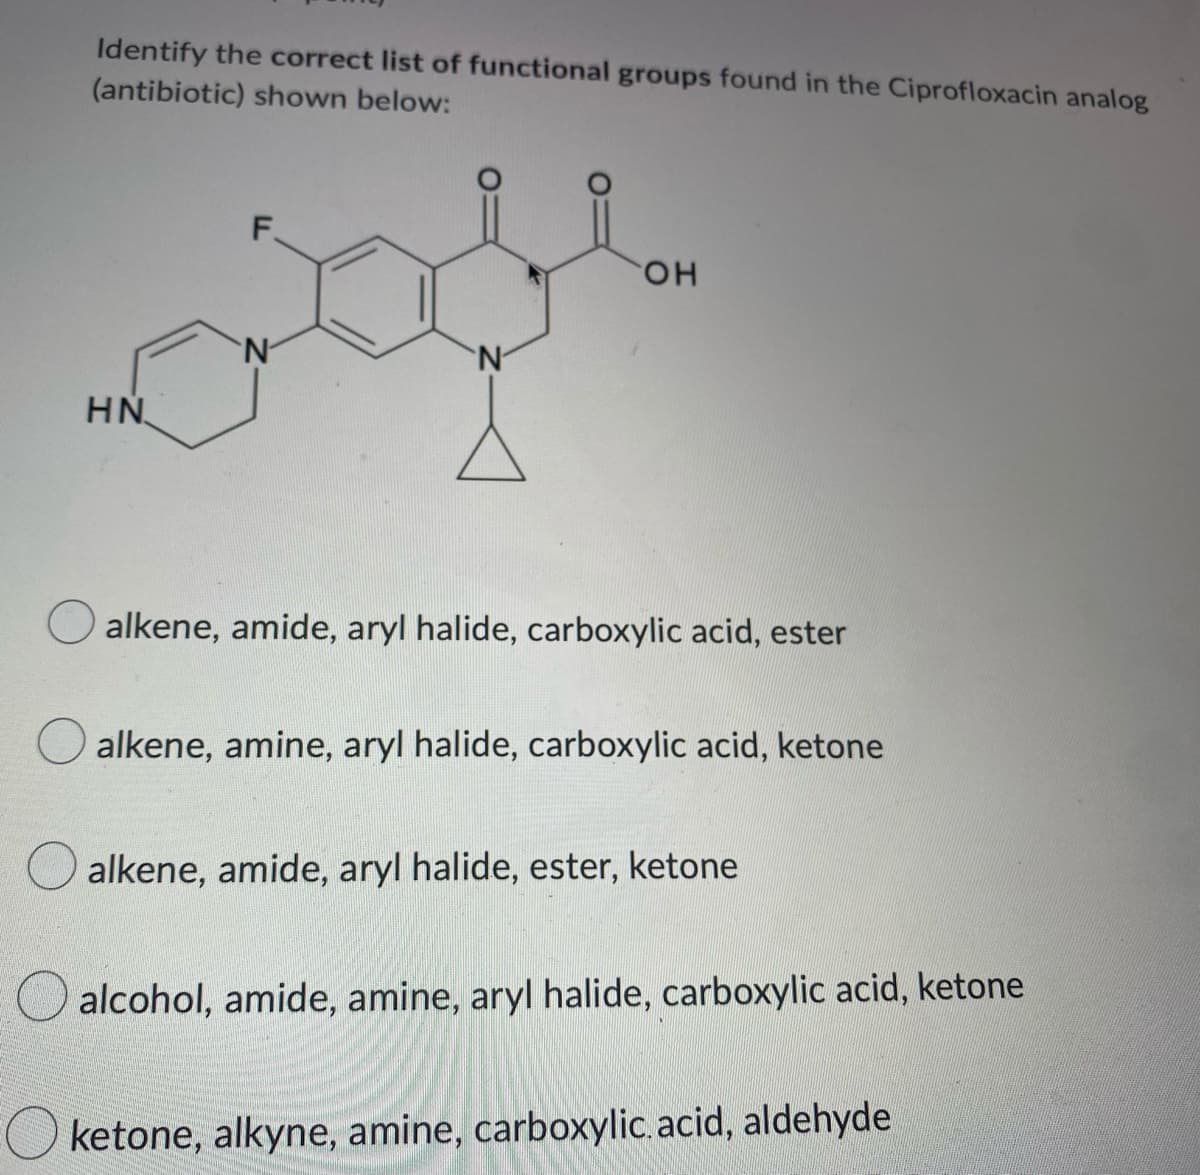 Identify the correct list of functional groups found in the Ciprofloxacin analog
(antibiotic) shown below:
F
он
N
N
HN
alkene, amide, aryl halide, carboxylic acid, ester
alkene, amine, aryl halide, carboxylic acid, ketone
alkene, amide, aryl halide, ester, ketone
alcohol, amide, amine, aryl halide, carboxylic acid, ketone
Oketone, alkyne, amine, carboxylic acid, aldehyde